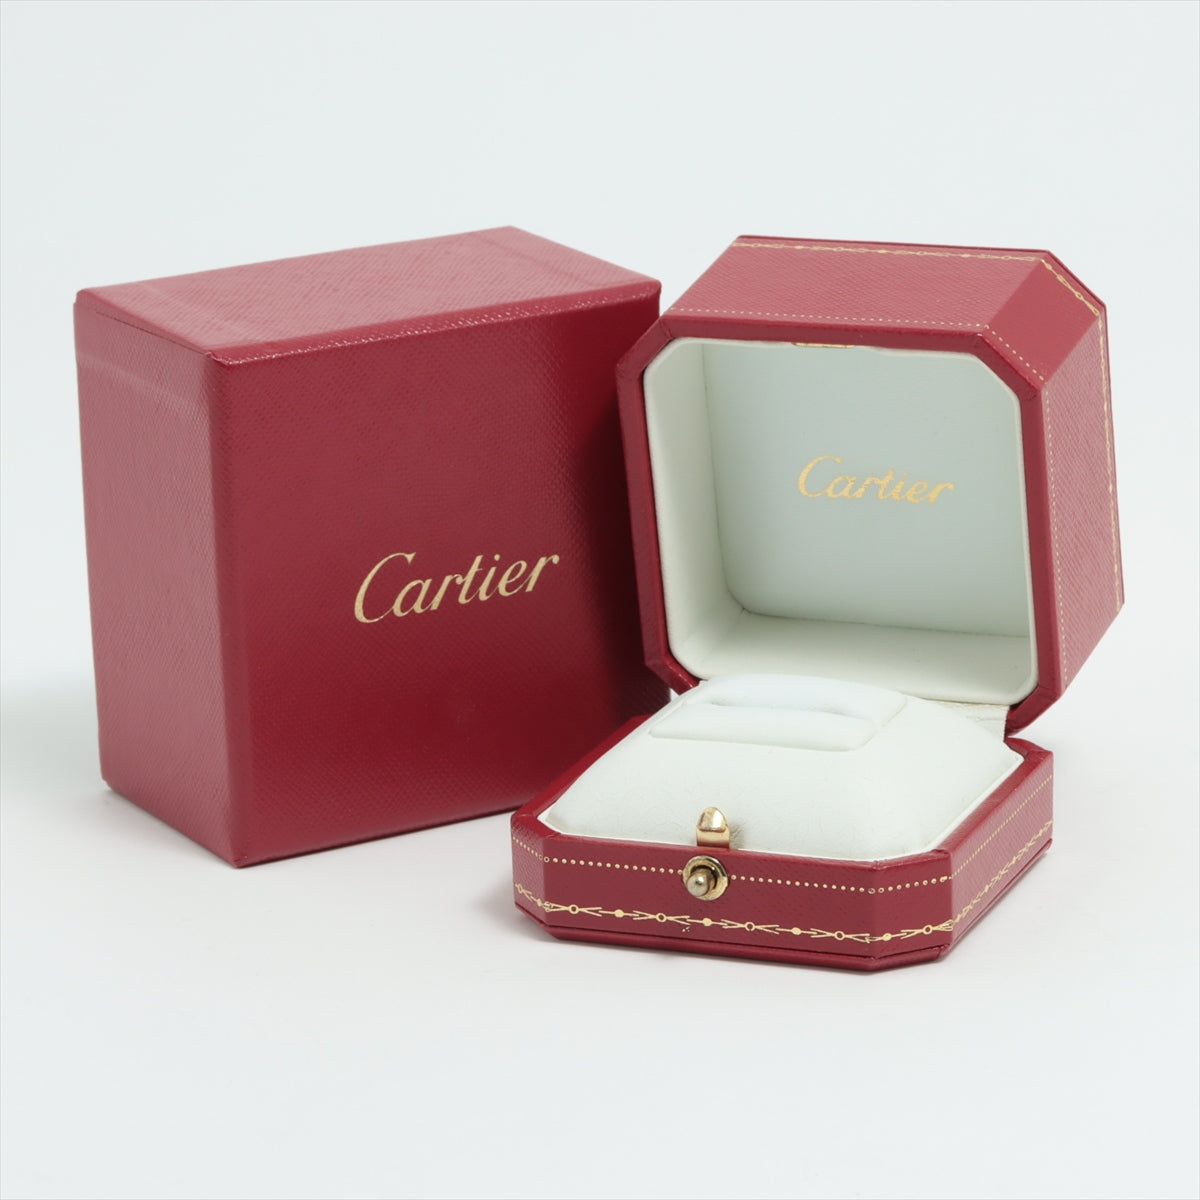 Cartier Mini Love 1P diamond rings 750(PG) 4.4g 51